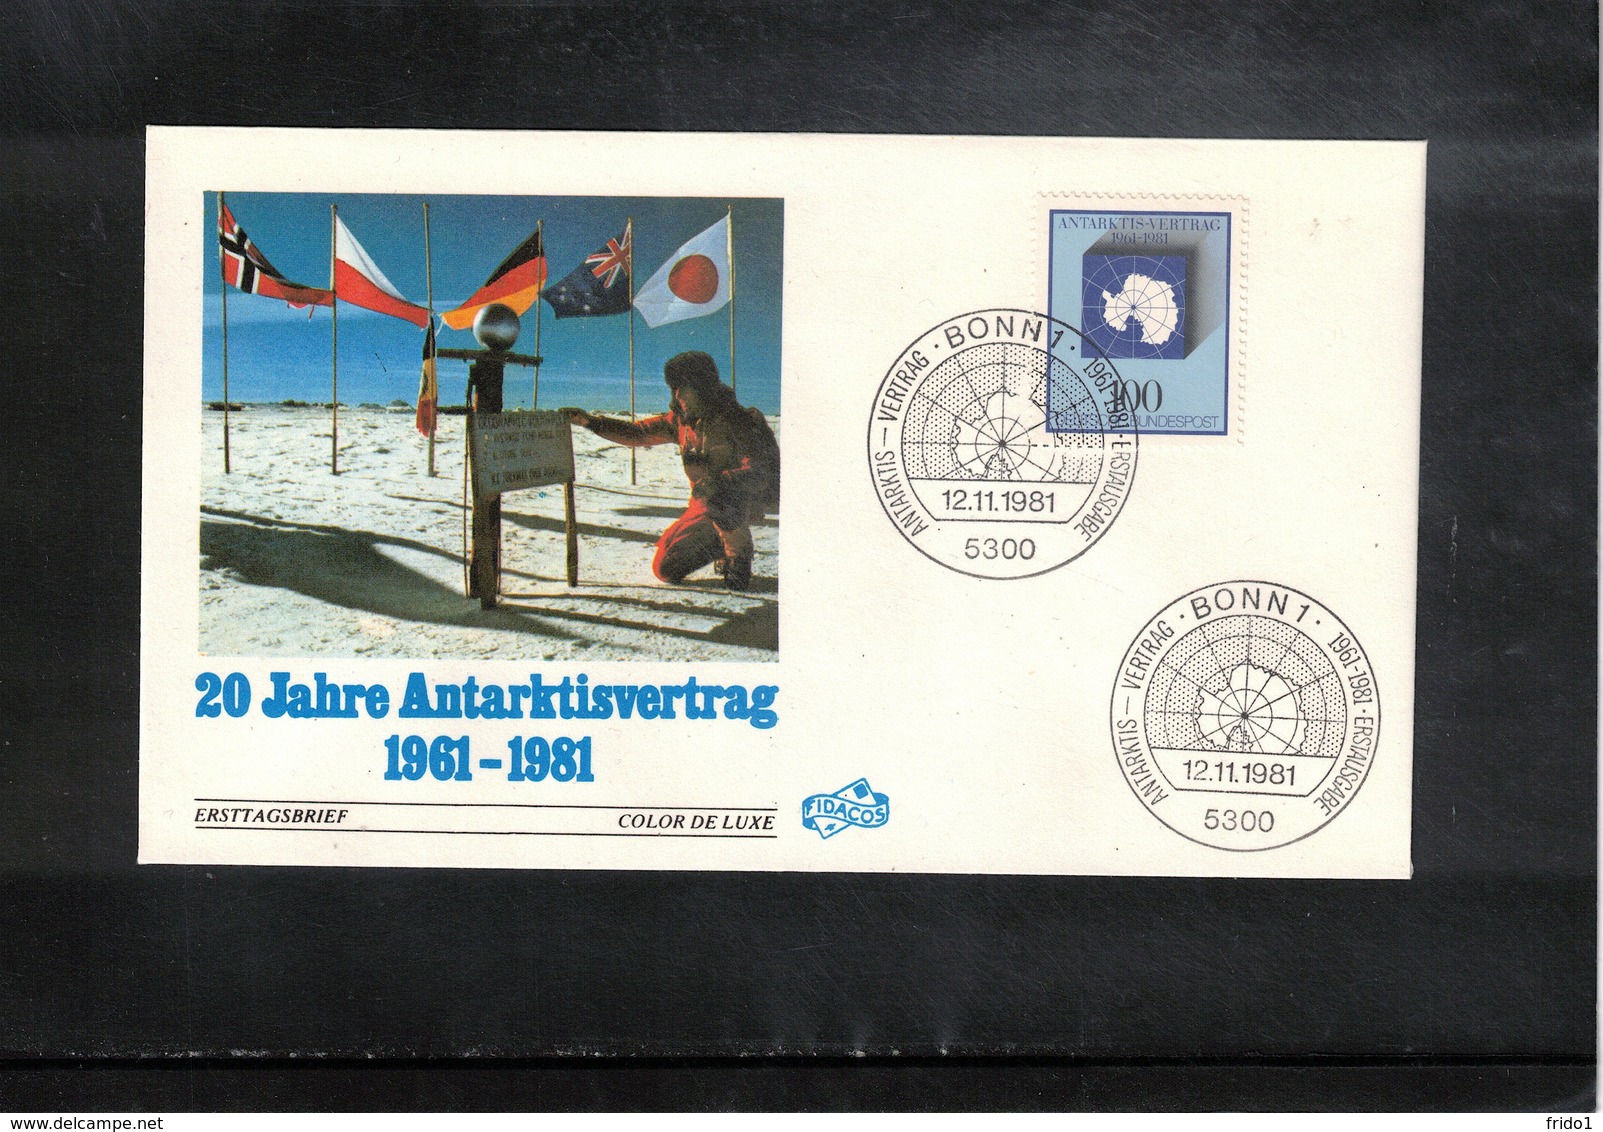 Germany / Deutschland 1981 Antarctic Treaty FDC - Antarctic Treaty